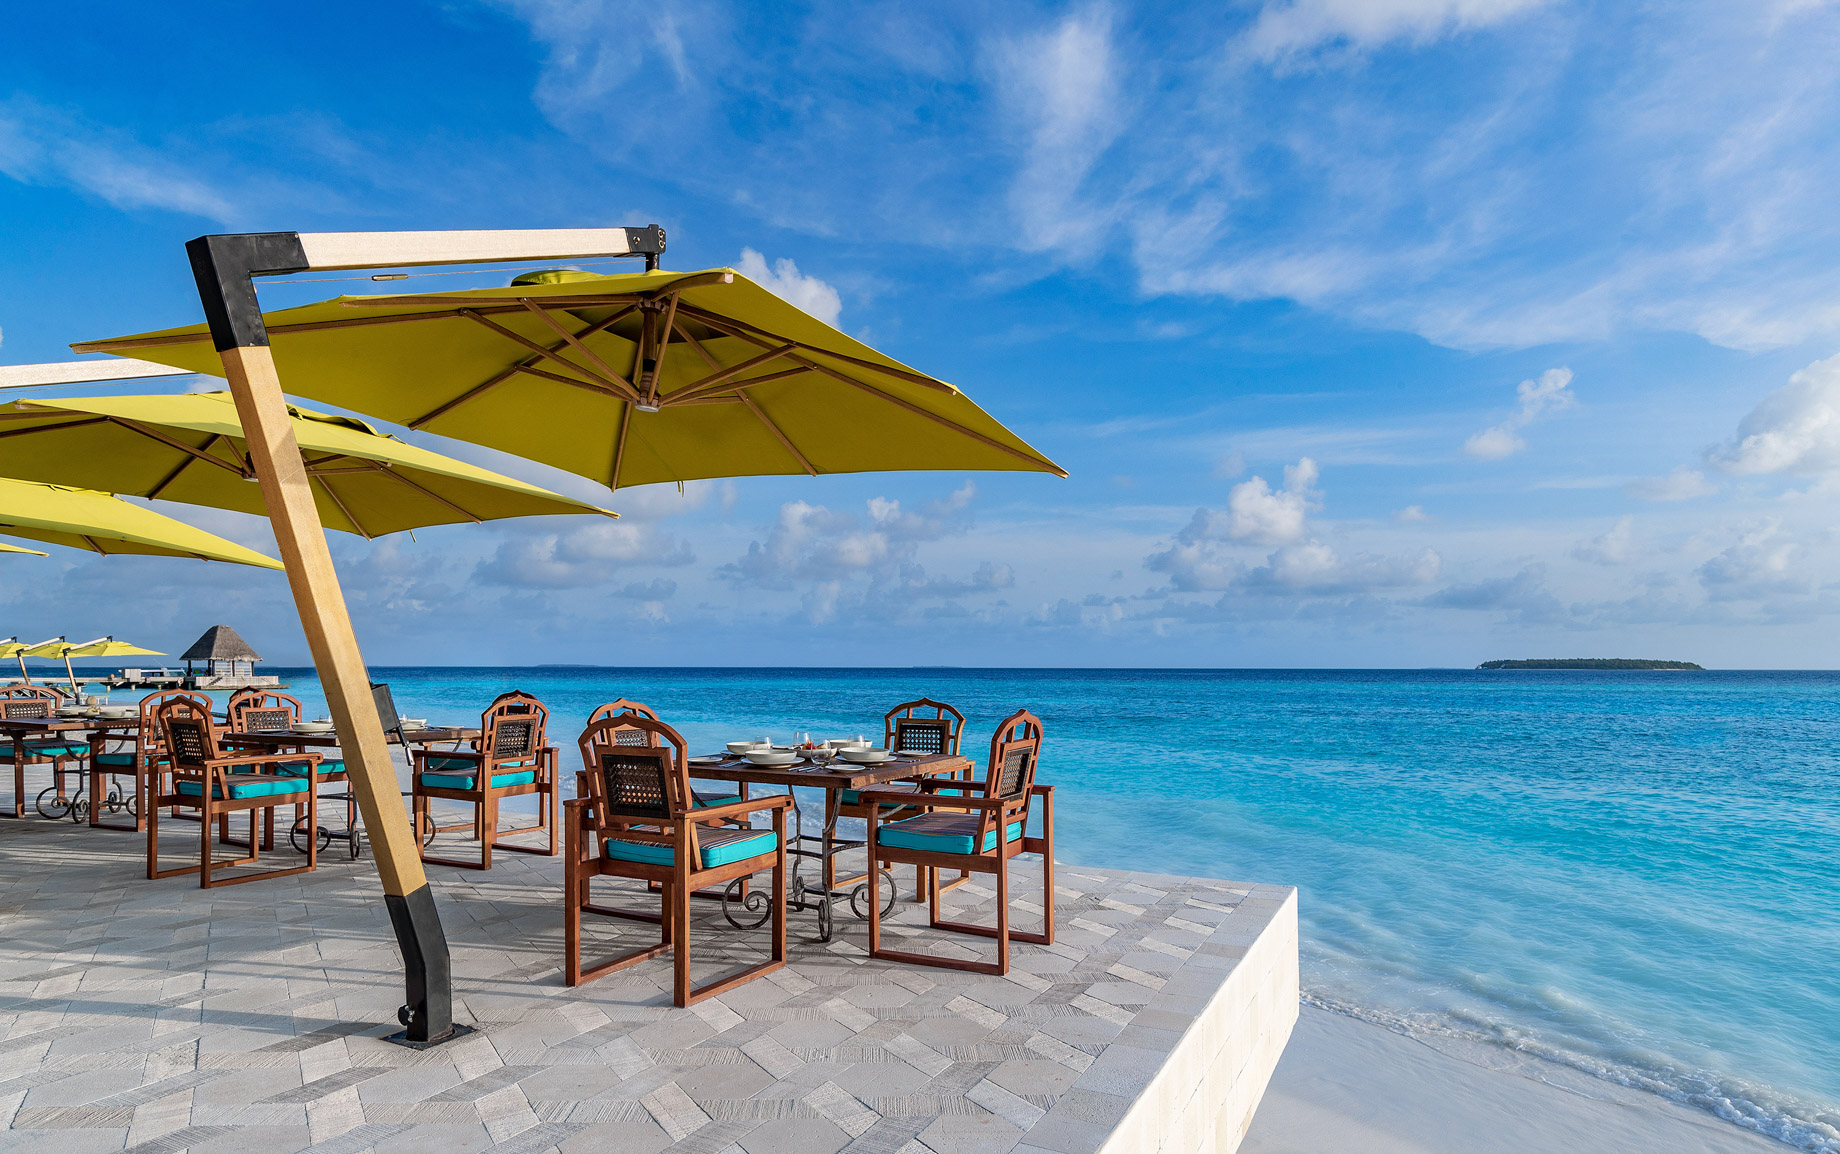 Anantara Kihavah Maldives Villas Resort - Baa Atoll, Maldives - Plates Restaurant Ocean View